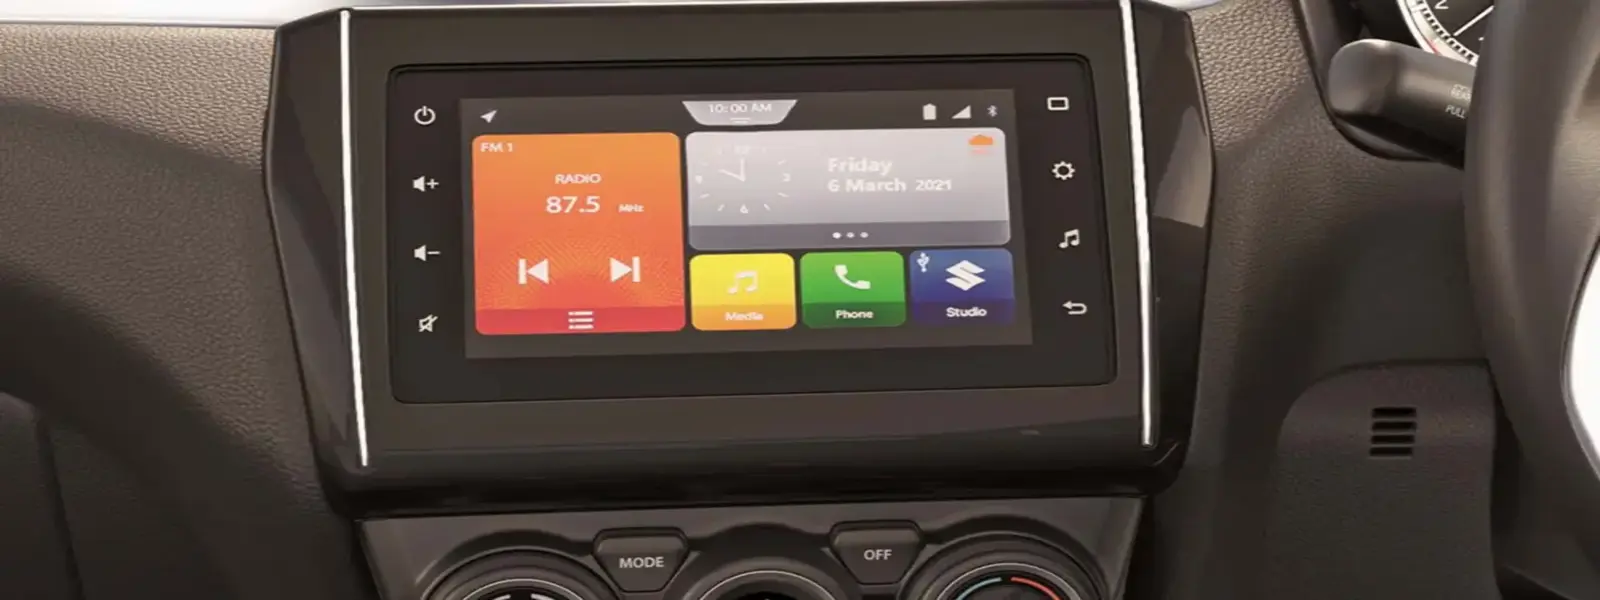 Swift- SmartPlay Infotainment System Poddar Car World Khanapara, Guwahati